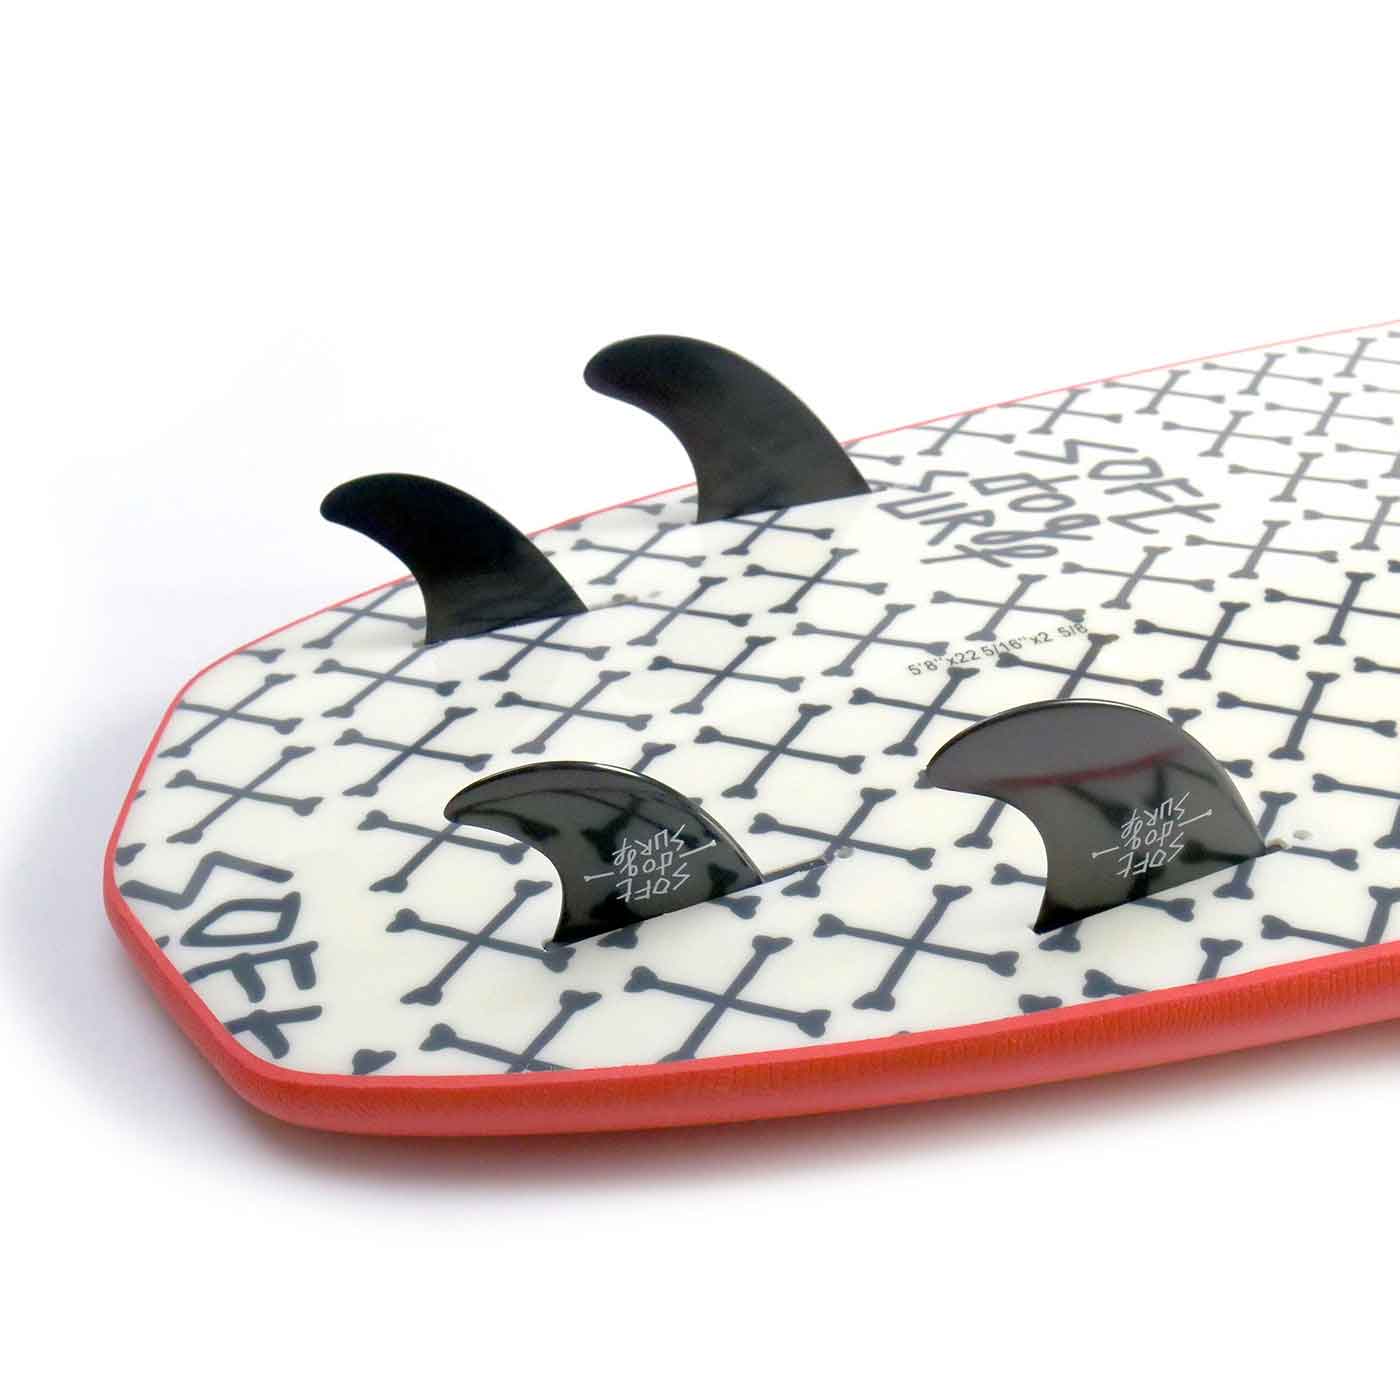 softdogsurf fins surfboard futures quad detail board